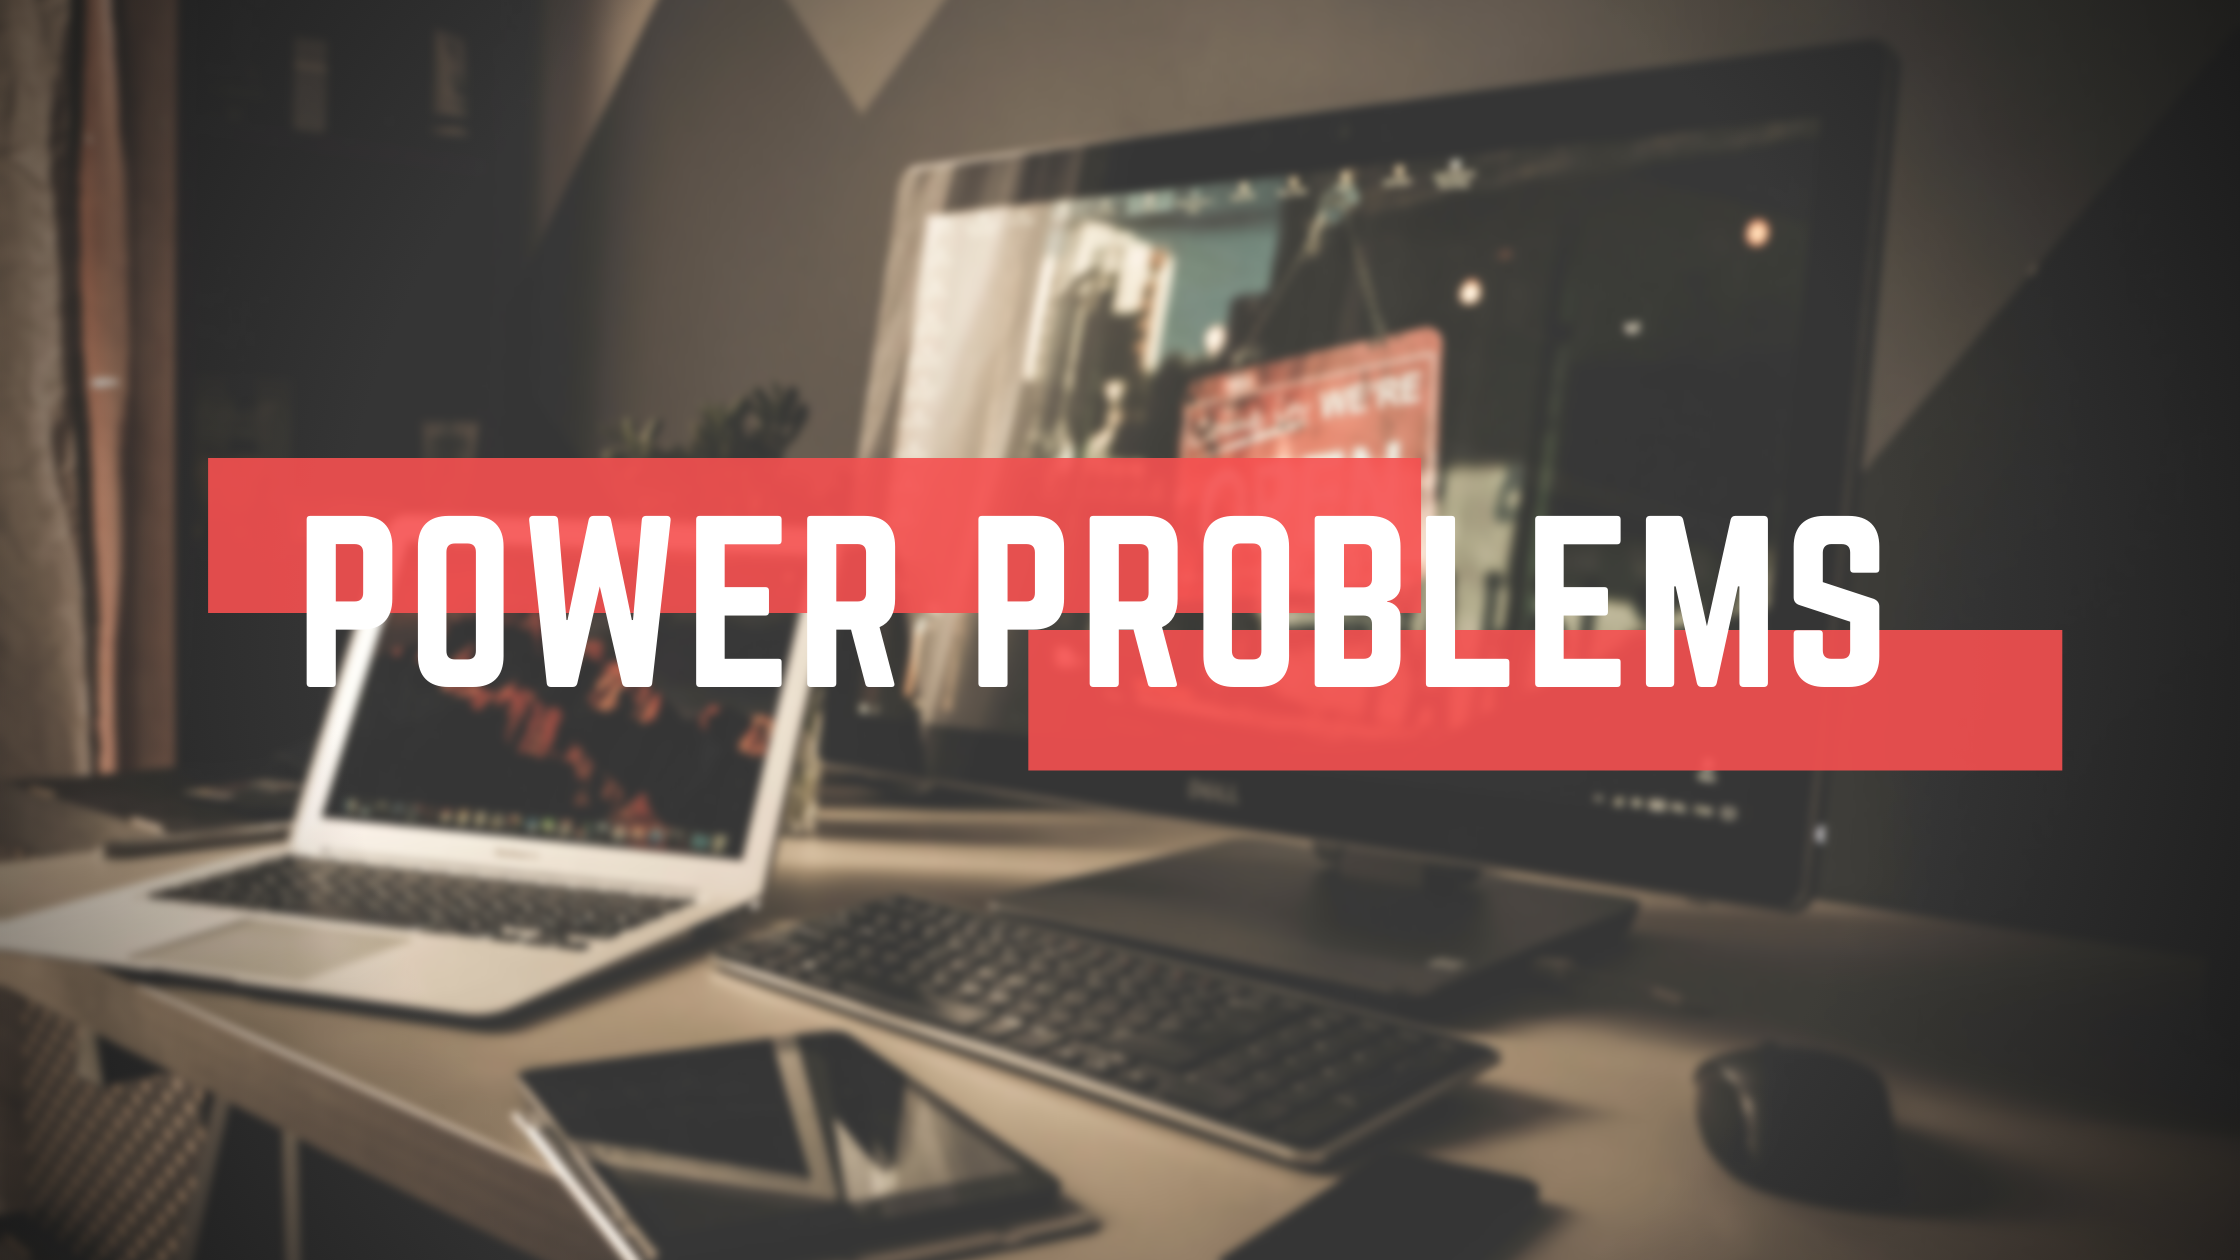 Power problems